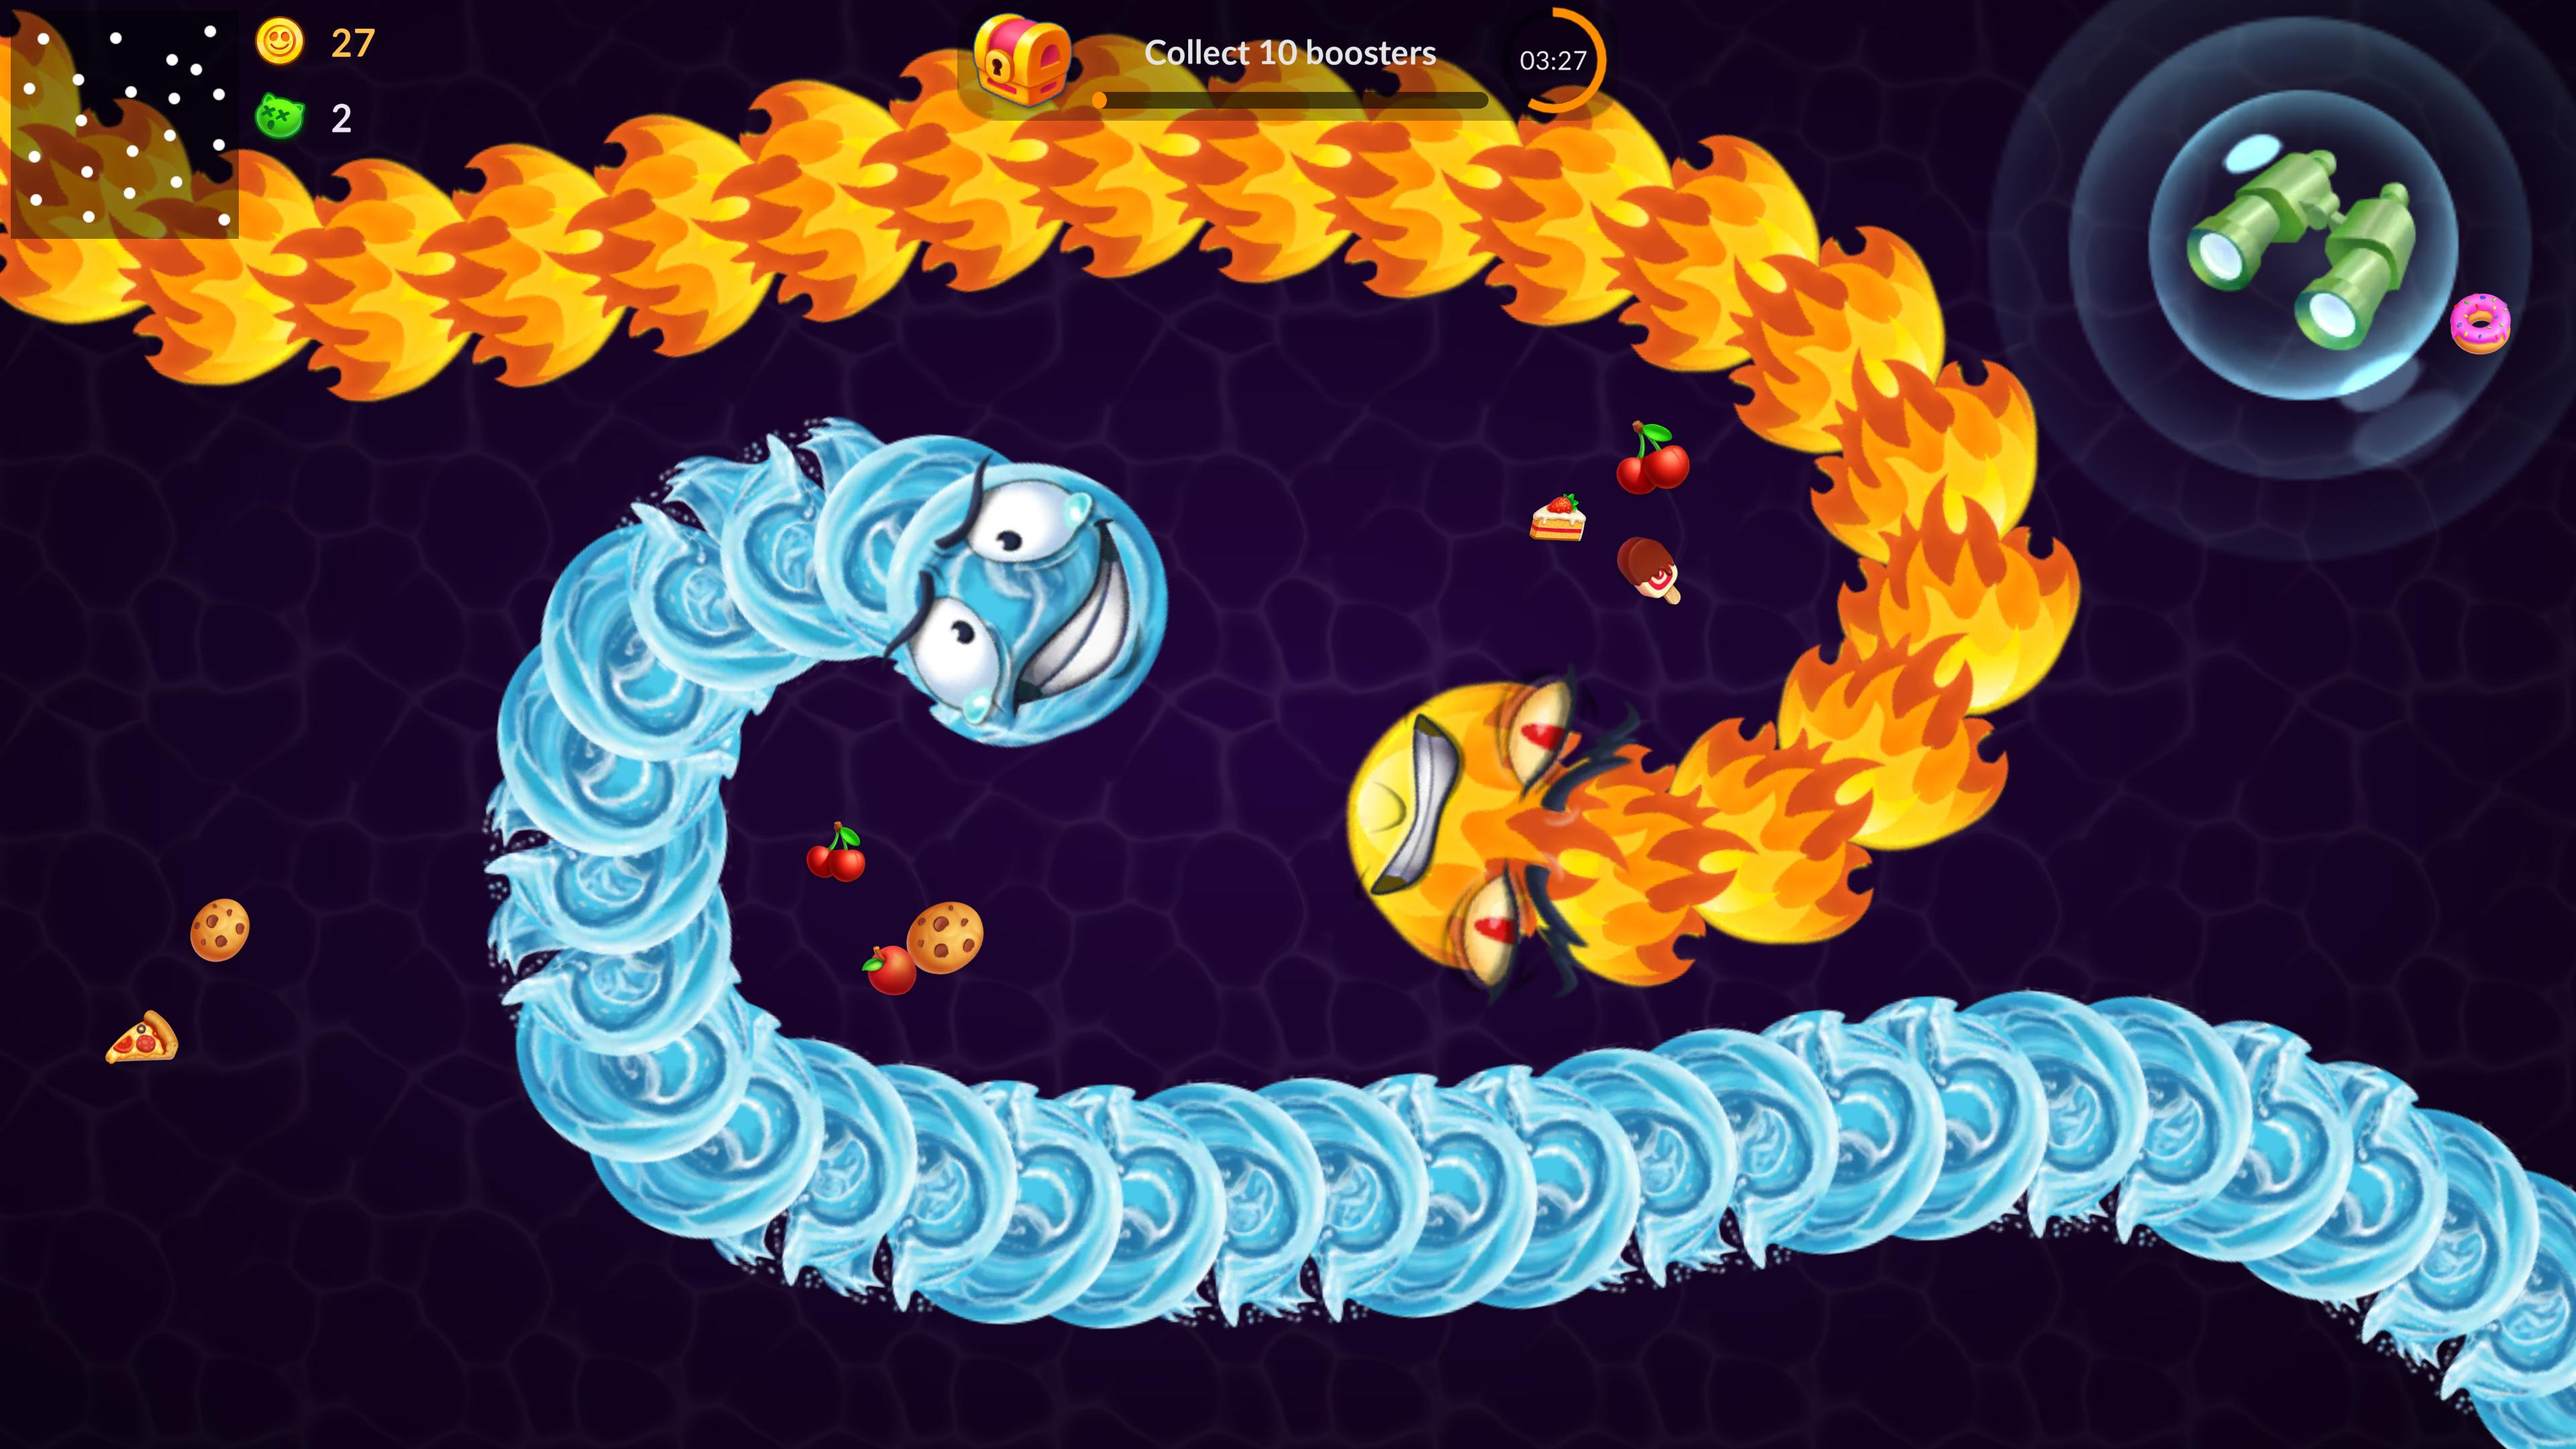 Snake.io - Fun Addicting Online Arcade .io Games APK for Android